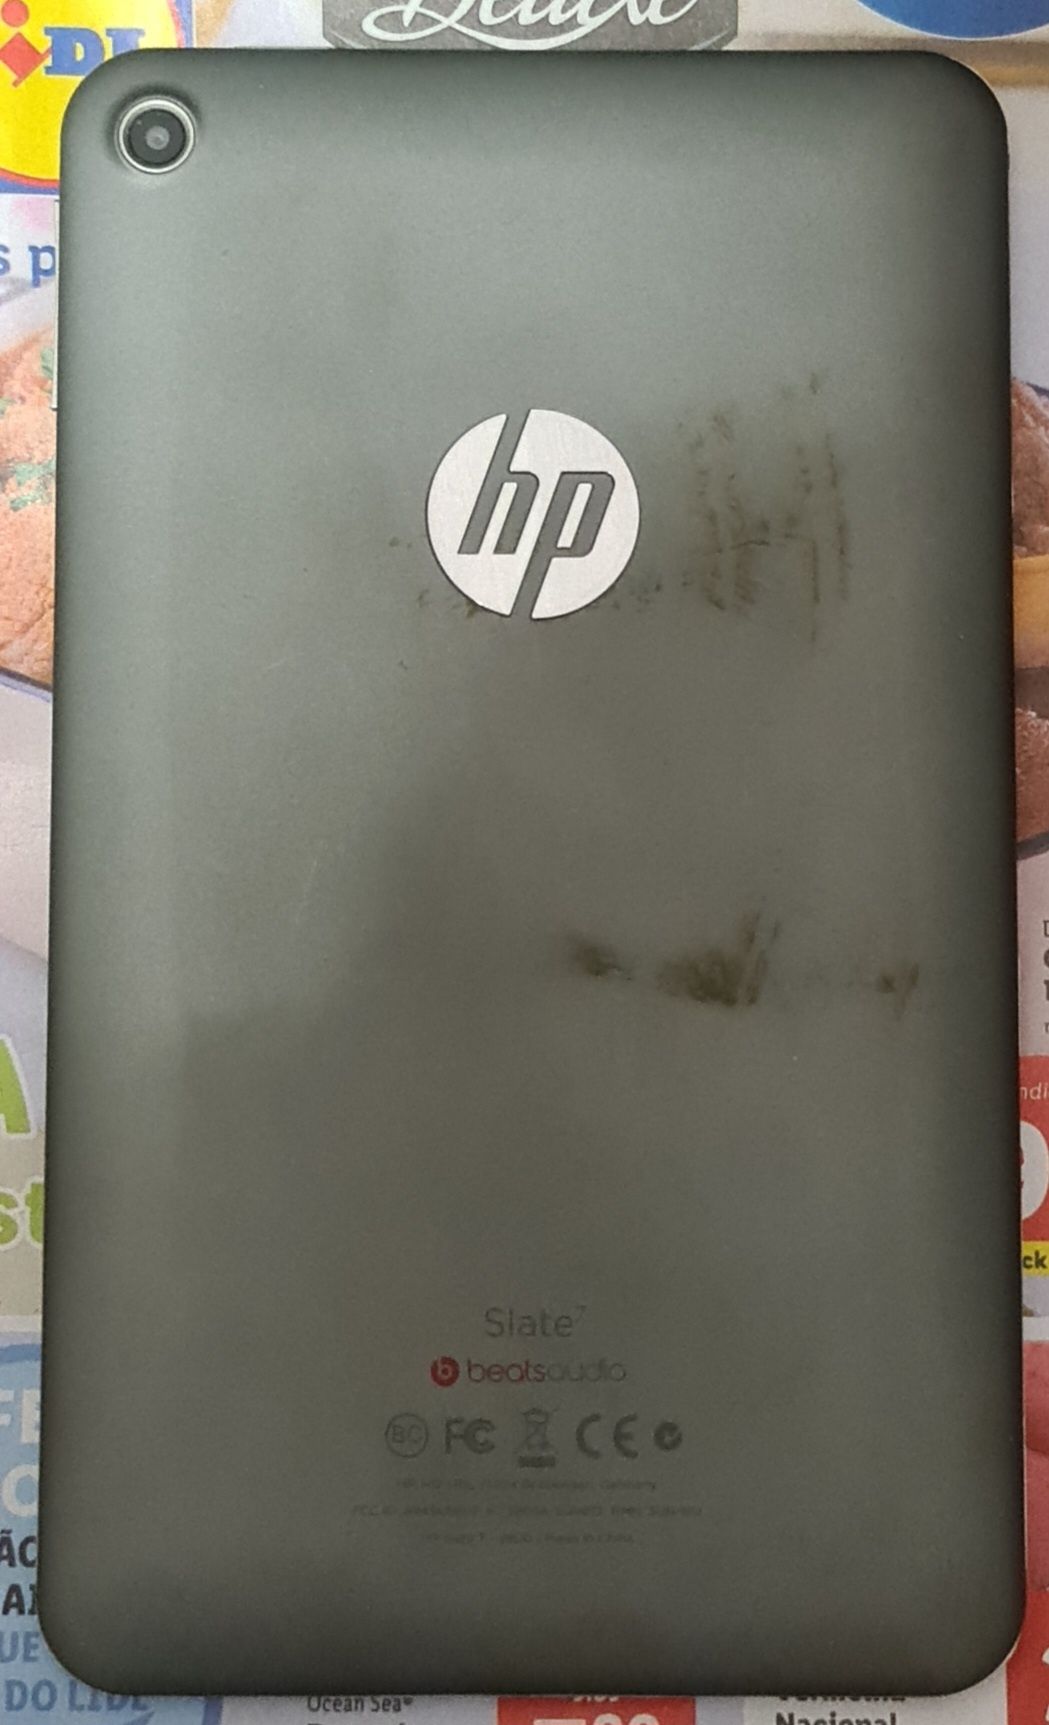 Tablet HP slate 7